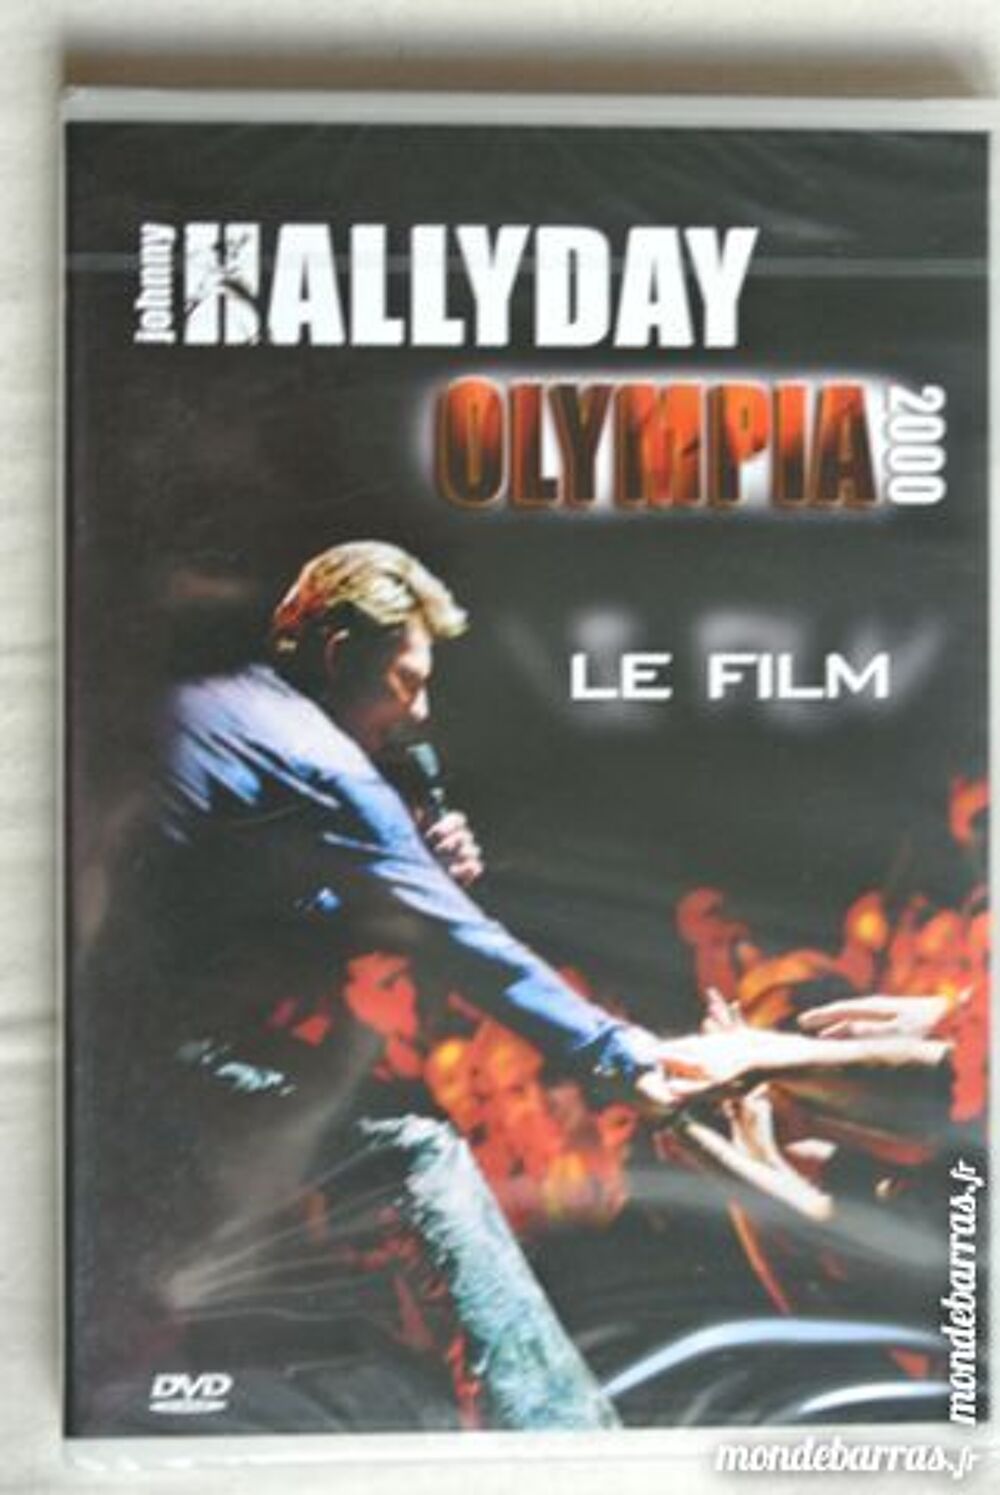 &quot;Johnny Hallyday Olympia 2000 &quot;&quot;Le film&quot;&quot;&quot; DVD et blu-ray